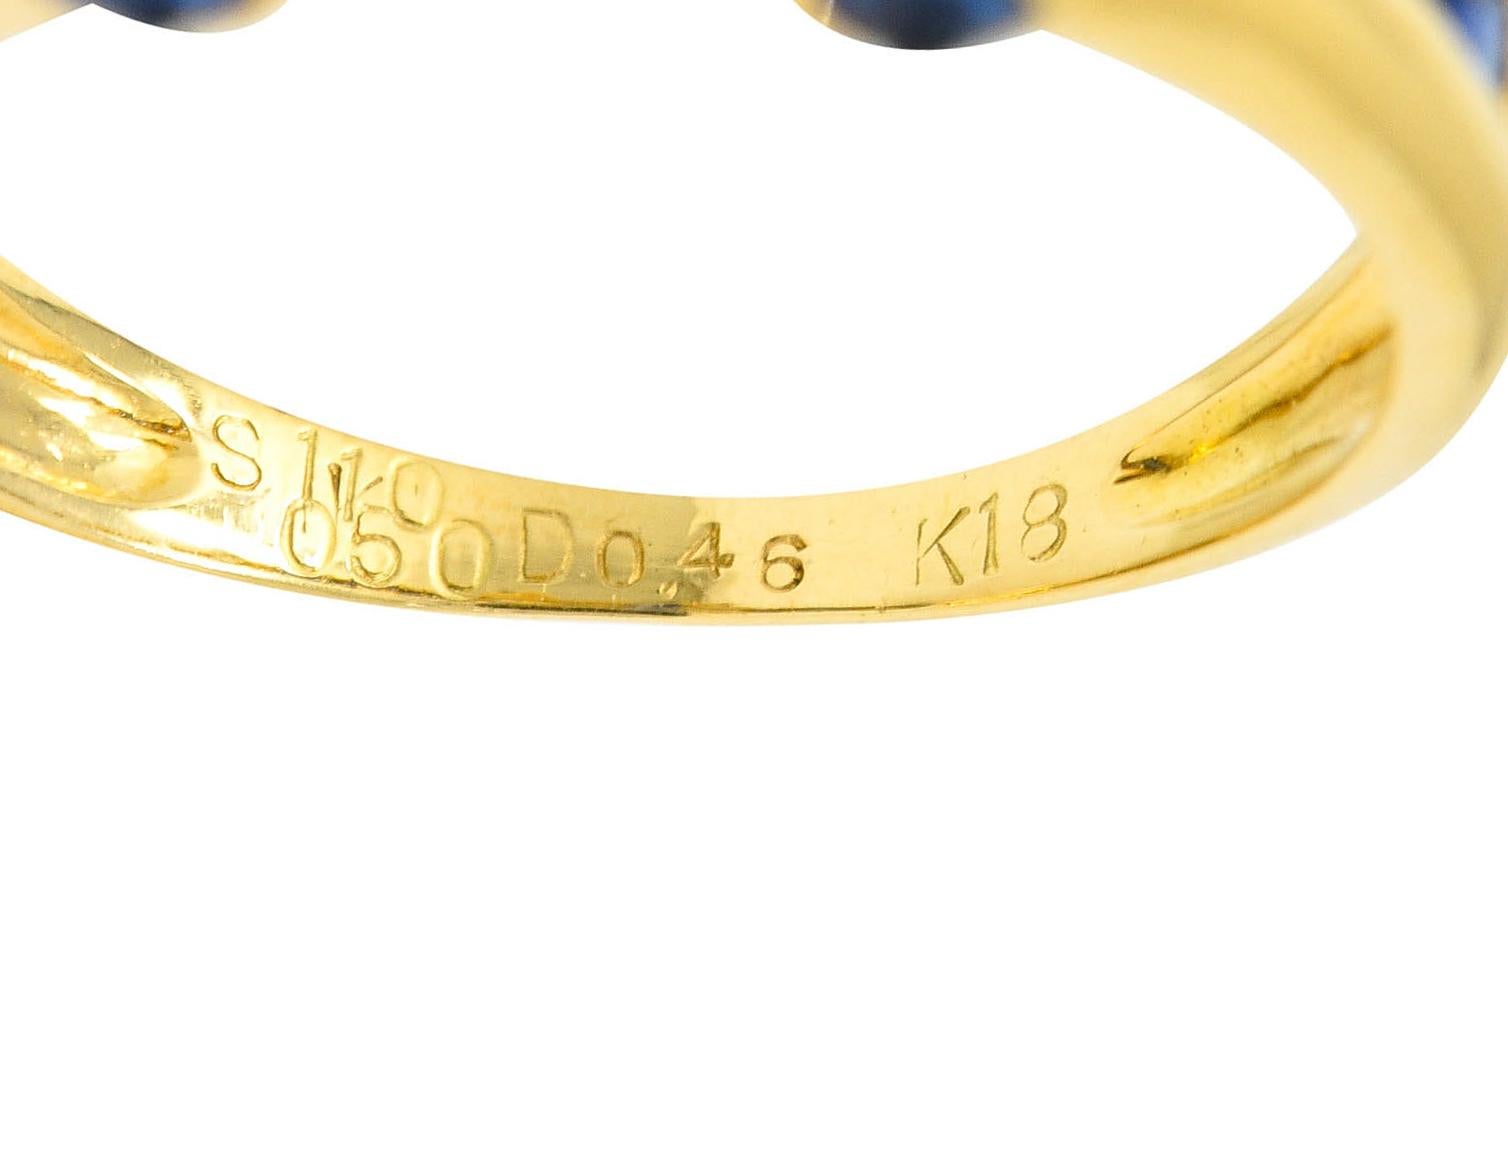 Modern Sapphire Diamond 18 Karat Gold Gemstone Ring 1